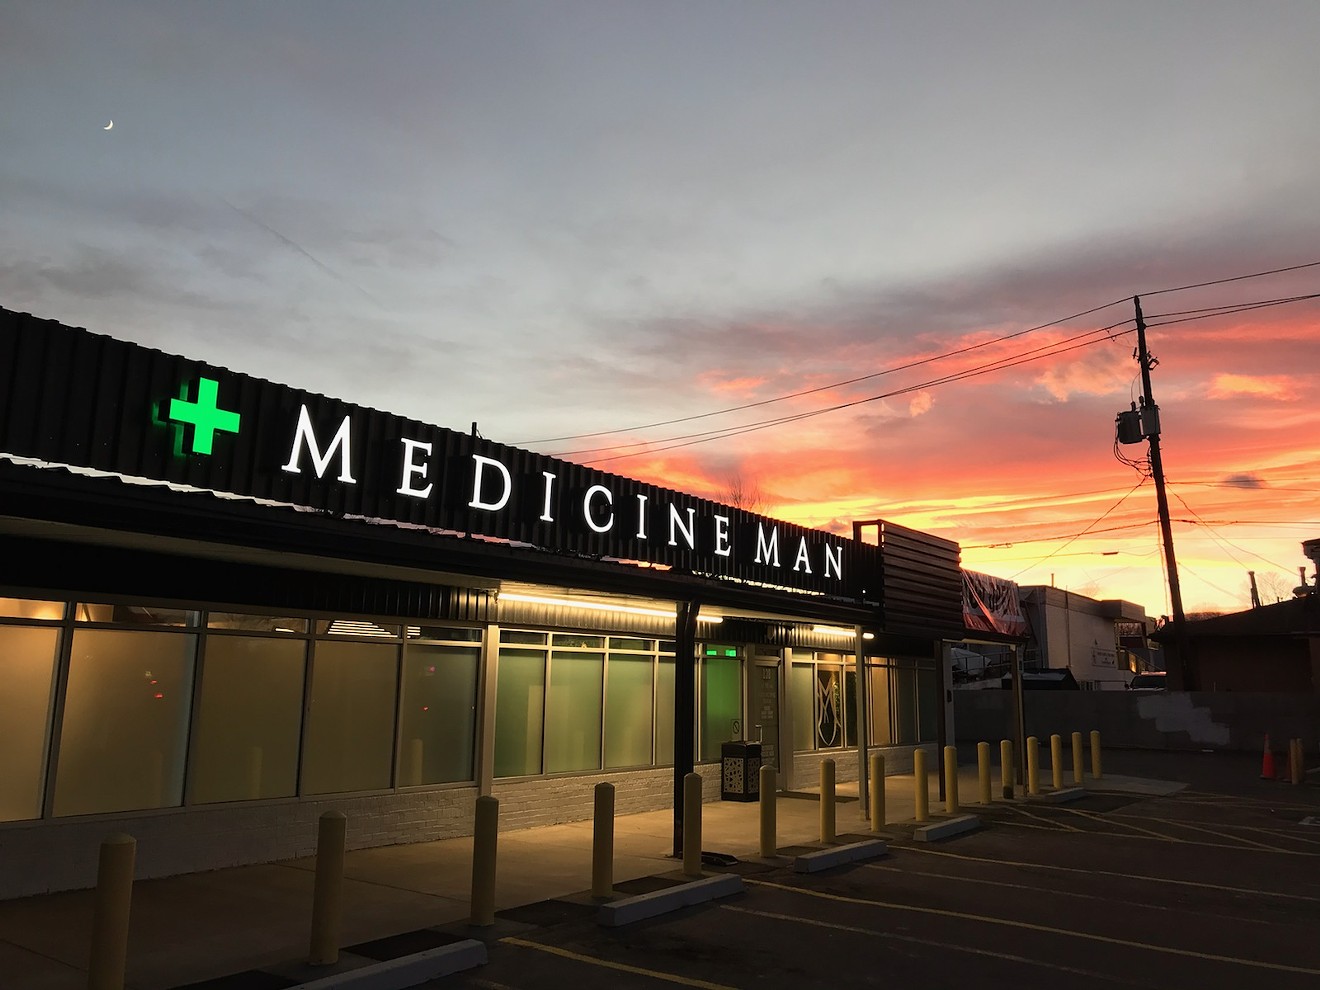 Medicine Man opened in Thornton on Wednesday, November 22.